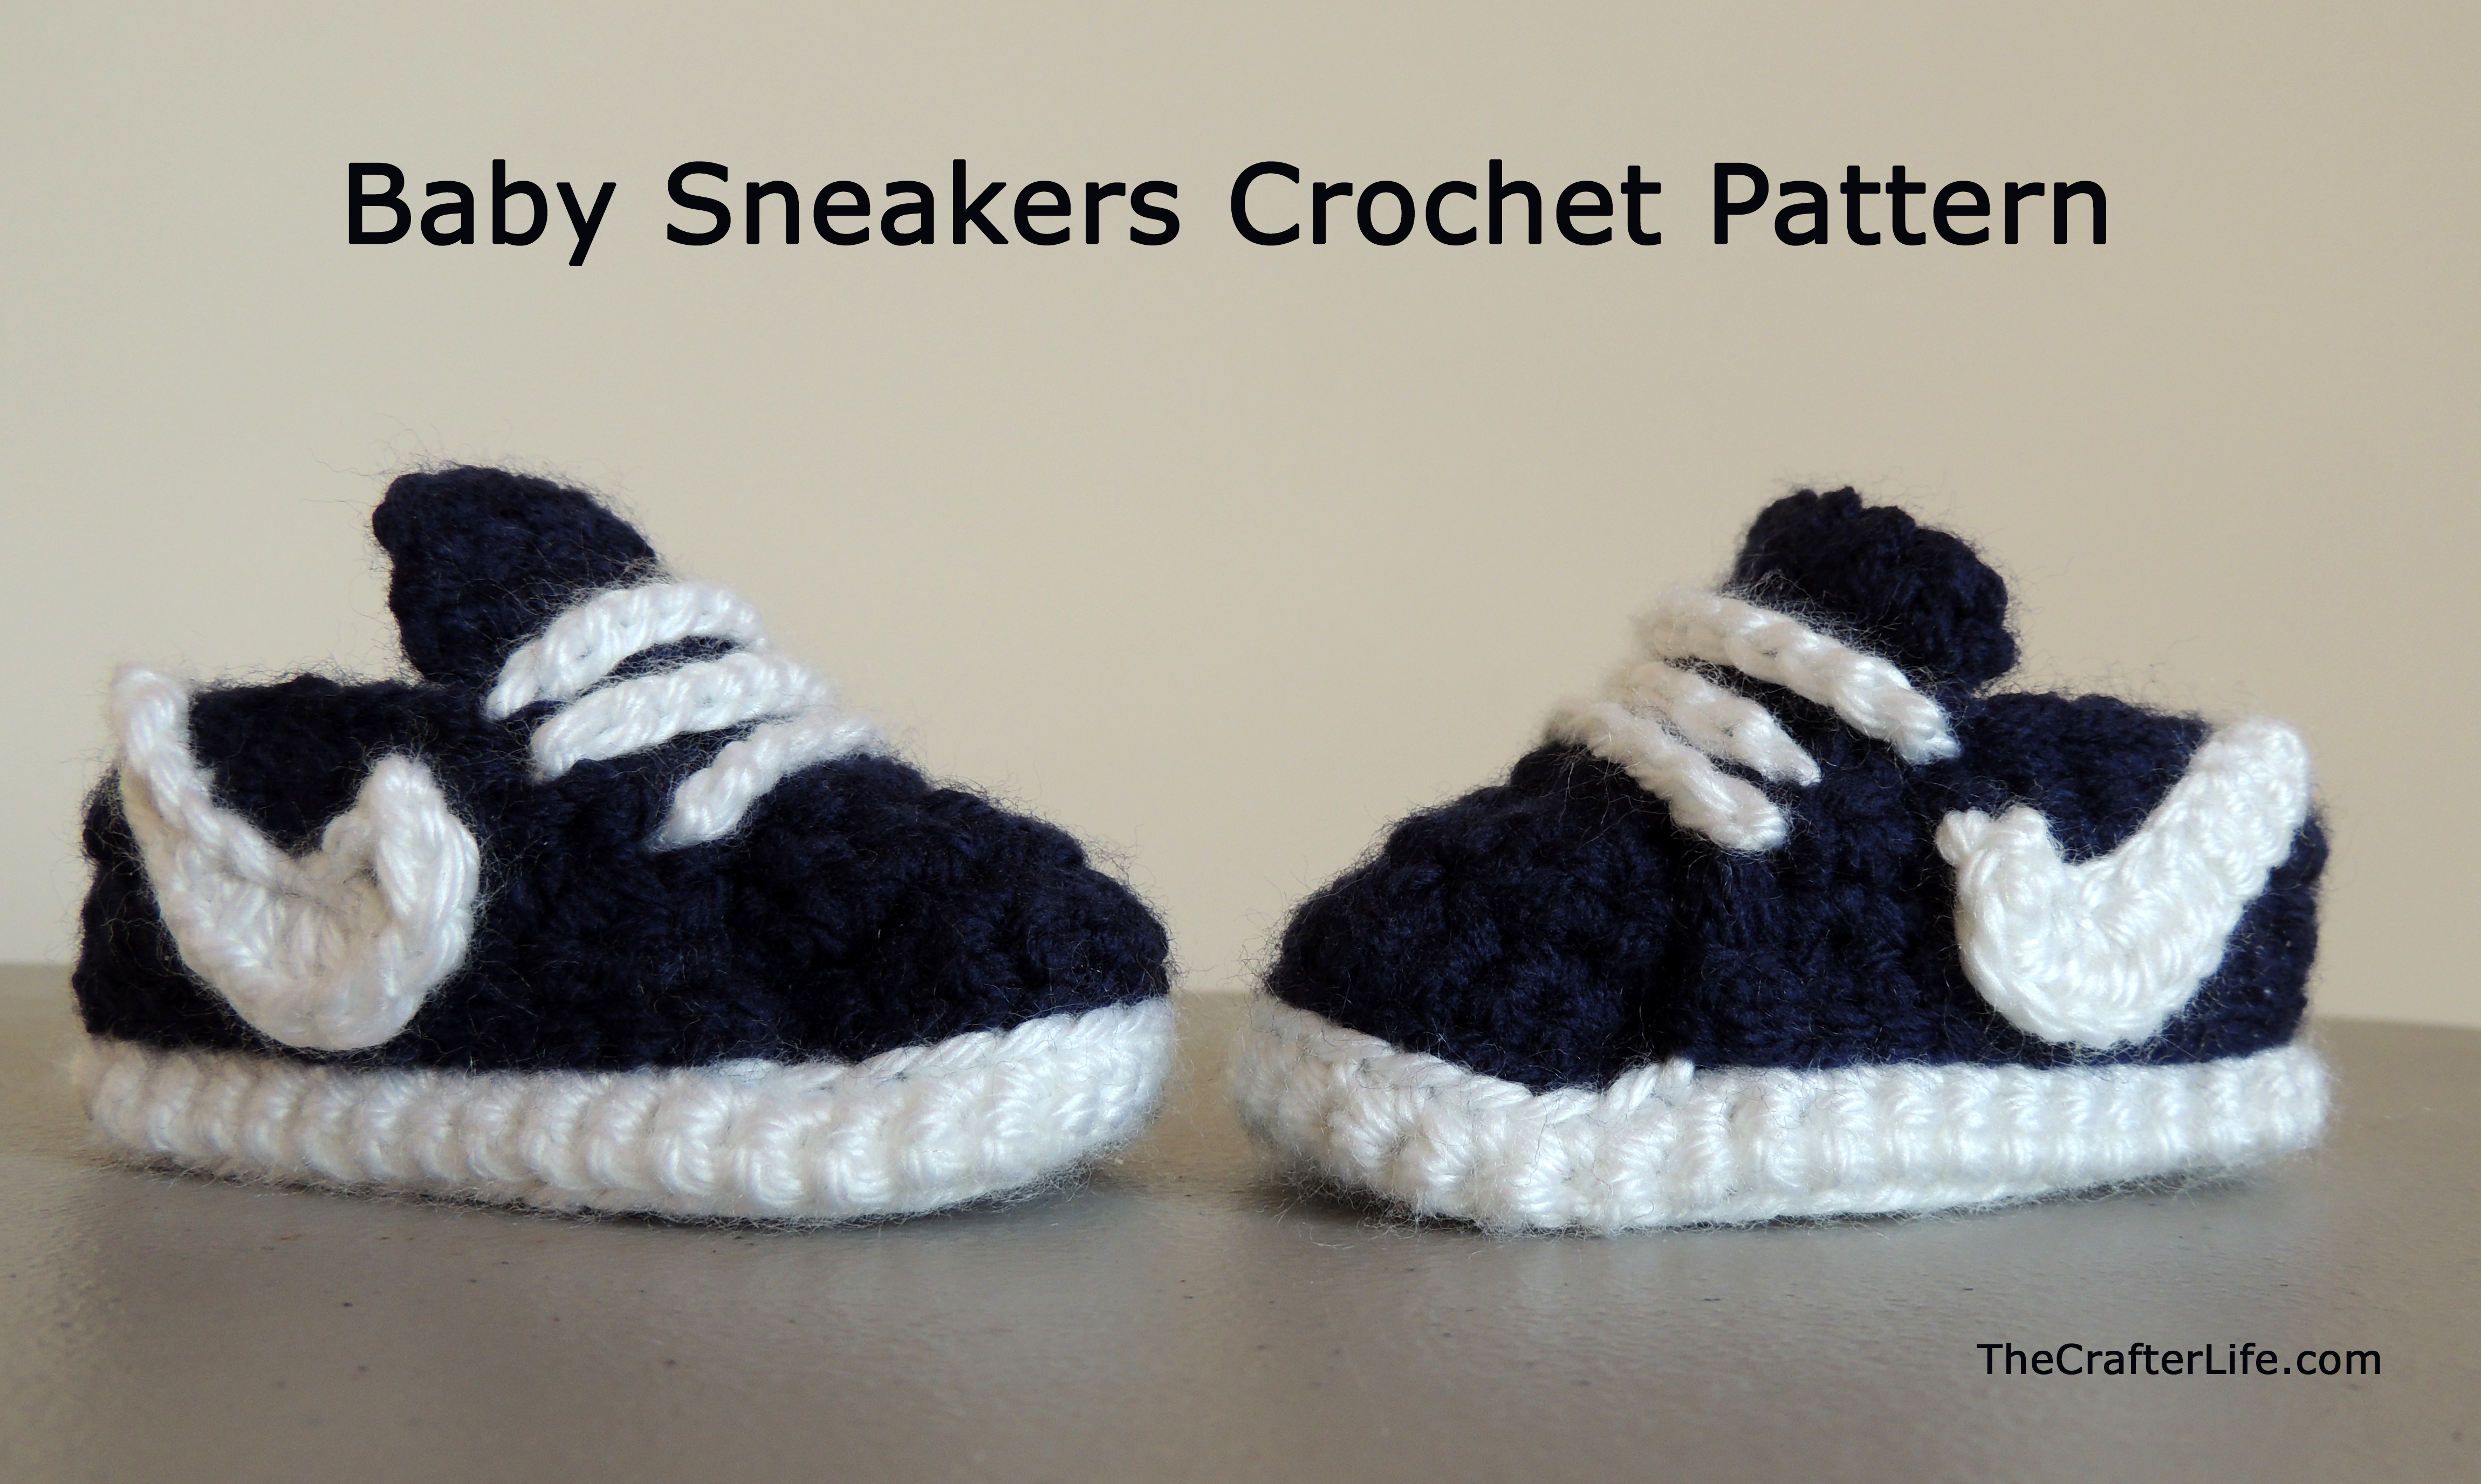 Baby Converse Crochet Pattern Ba Sneakers Crochet Pattern The Crafter Life